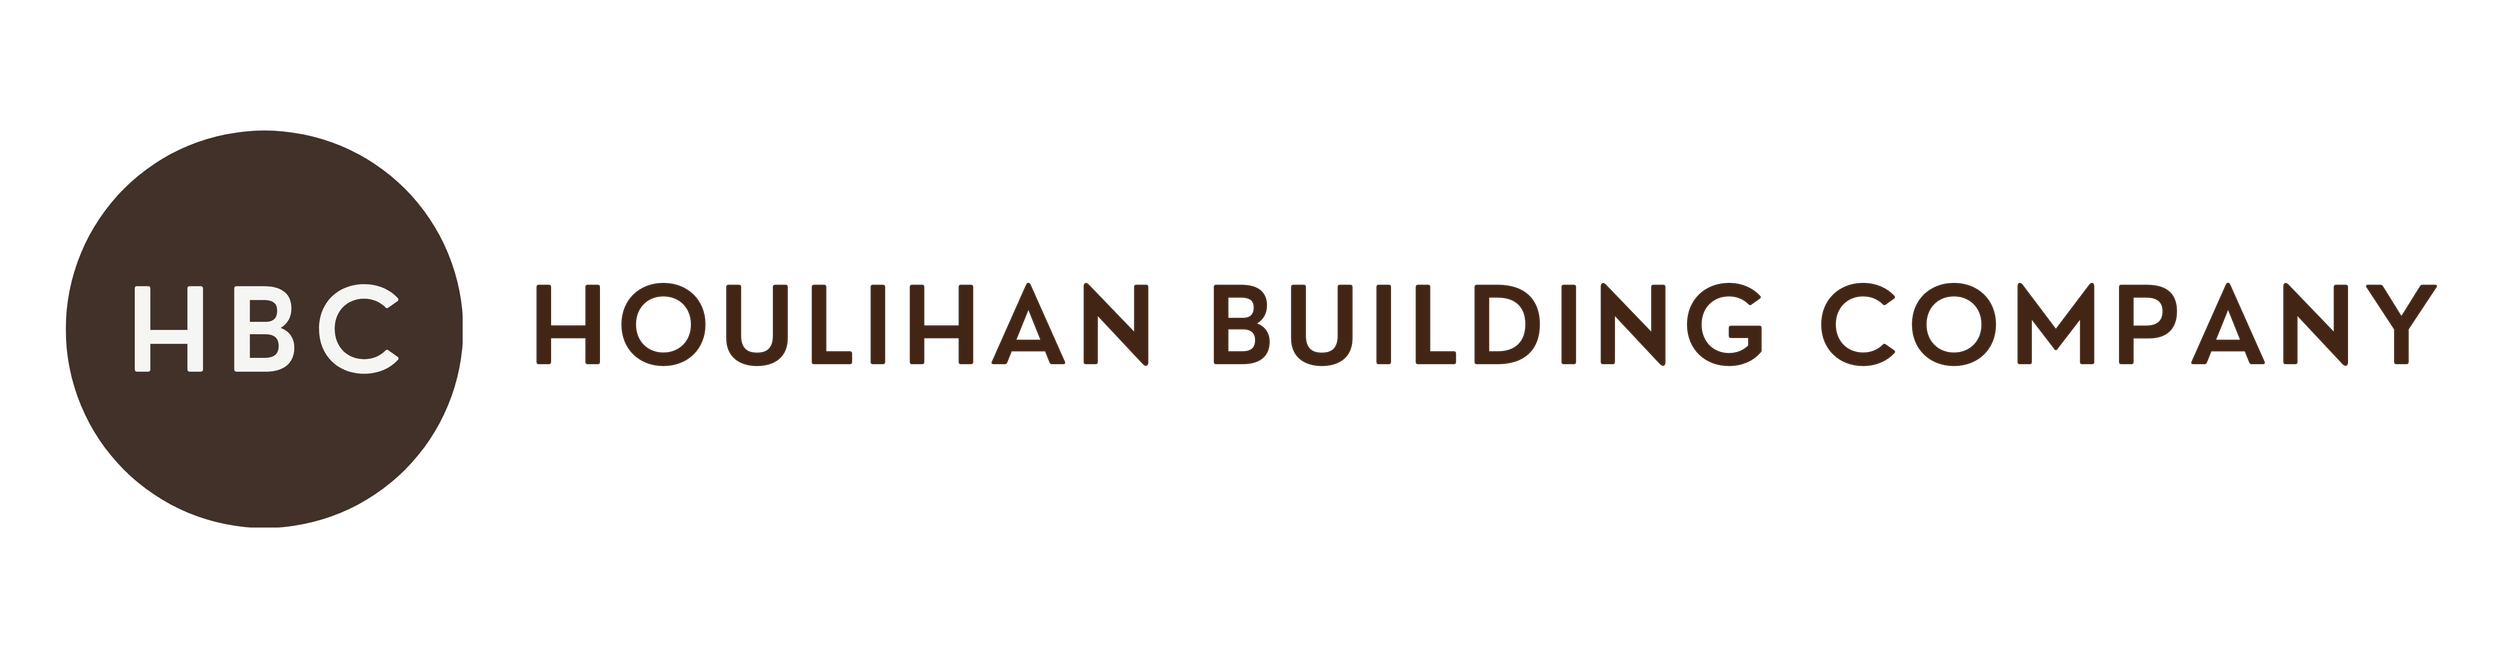 Houlihan Building Company